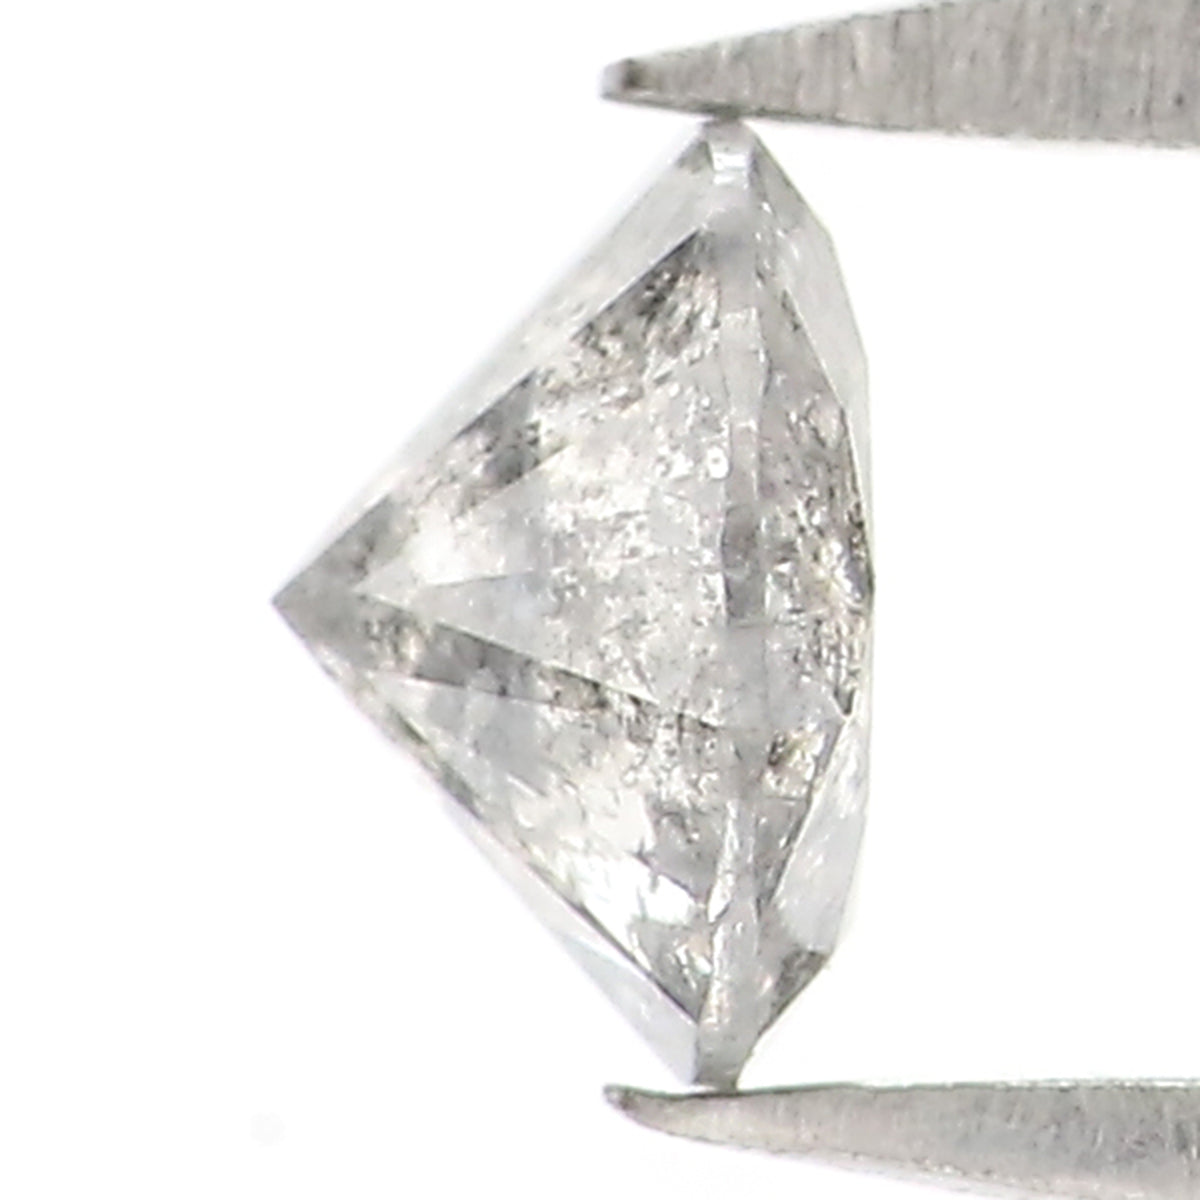 Natural Loose Round Diamond, Salt And Pepper Round Diamond, Natural Loose Diamond, Round Brilliant Cut Diamond, 0.36 CT Round Shape KR2653